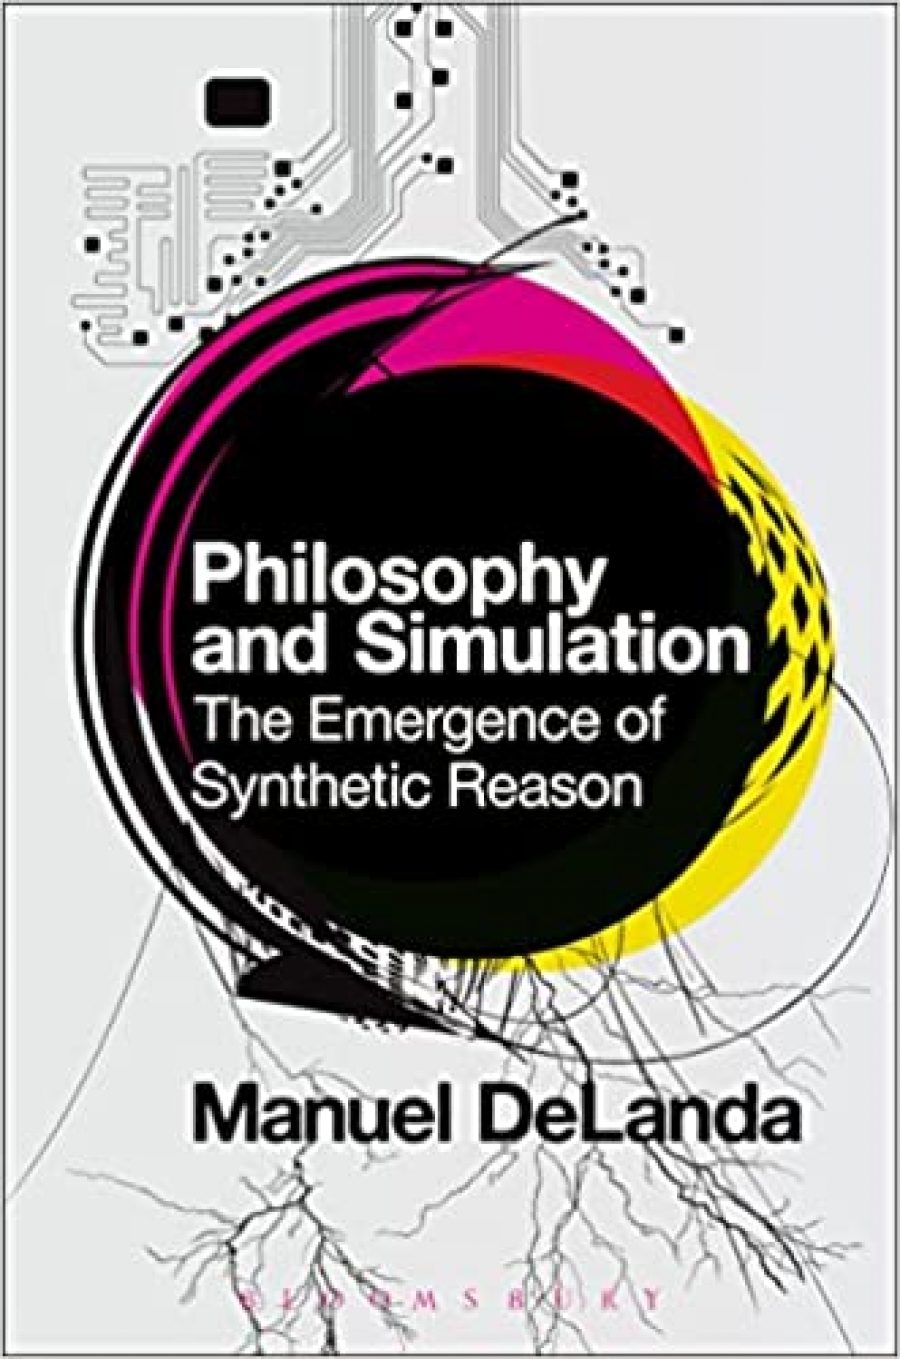 DeLanda,Manuel P BR:Philosophy and Simulation 